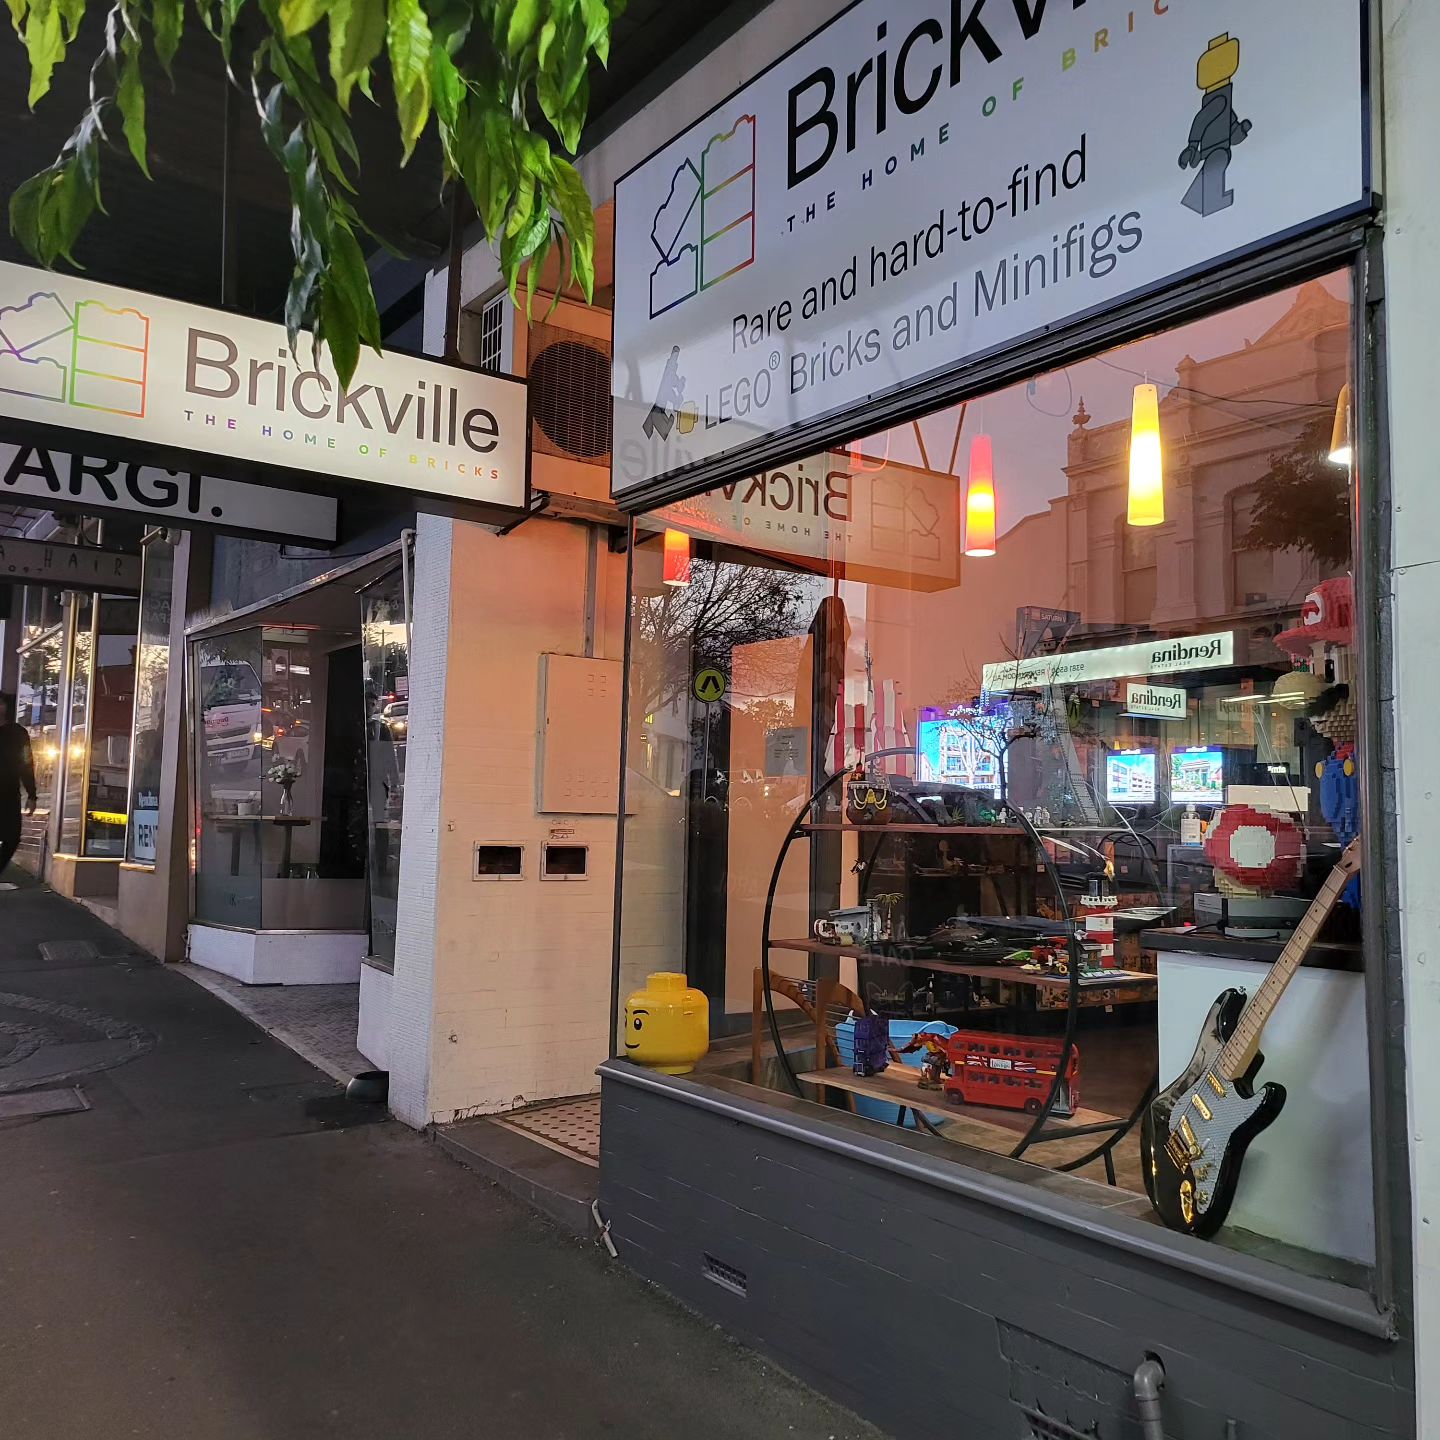 Brickville – The Home of Bricks